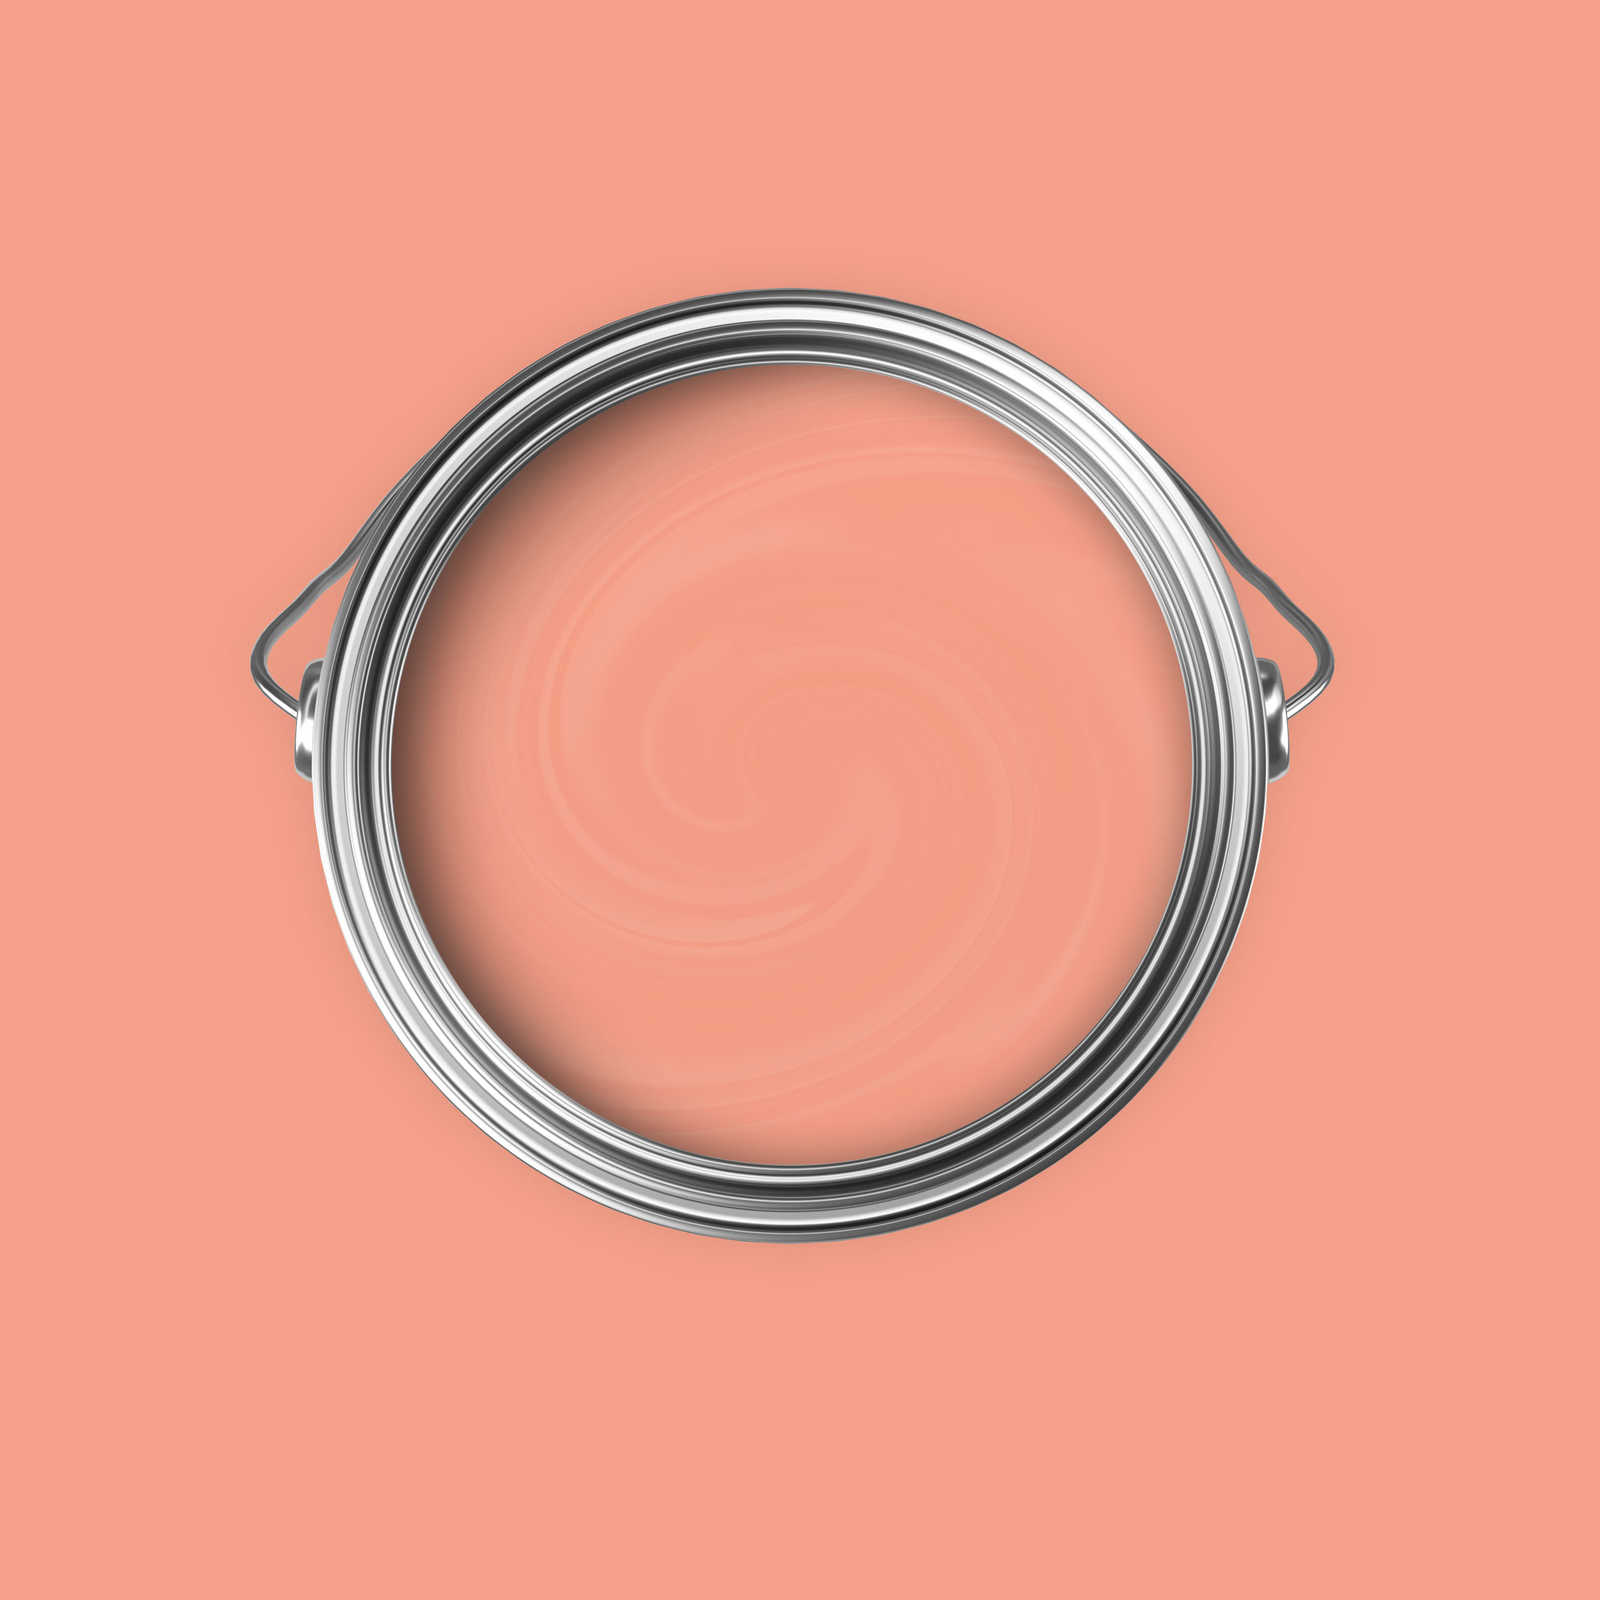             Pintura mural Premium Harmonious Salmon »Active Apricot« NW914 – 5 litro
        